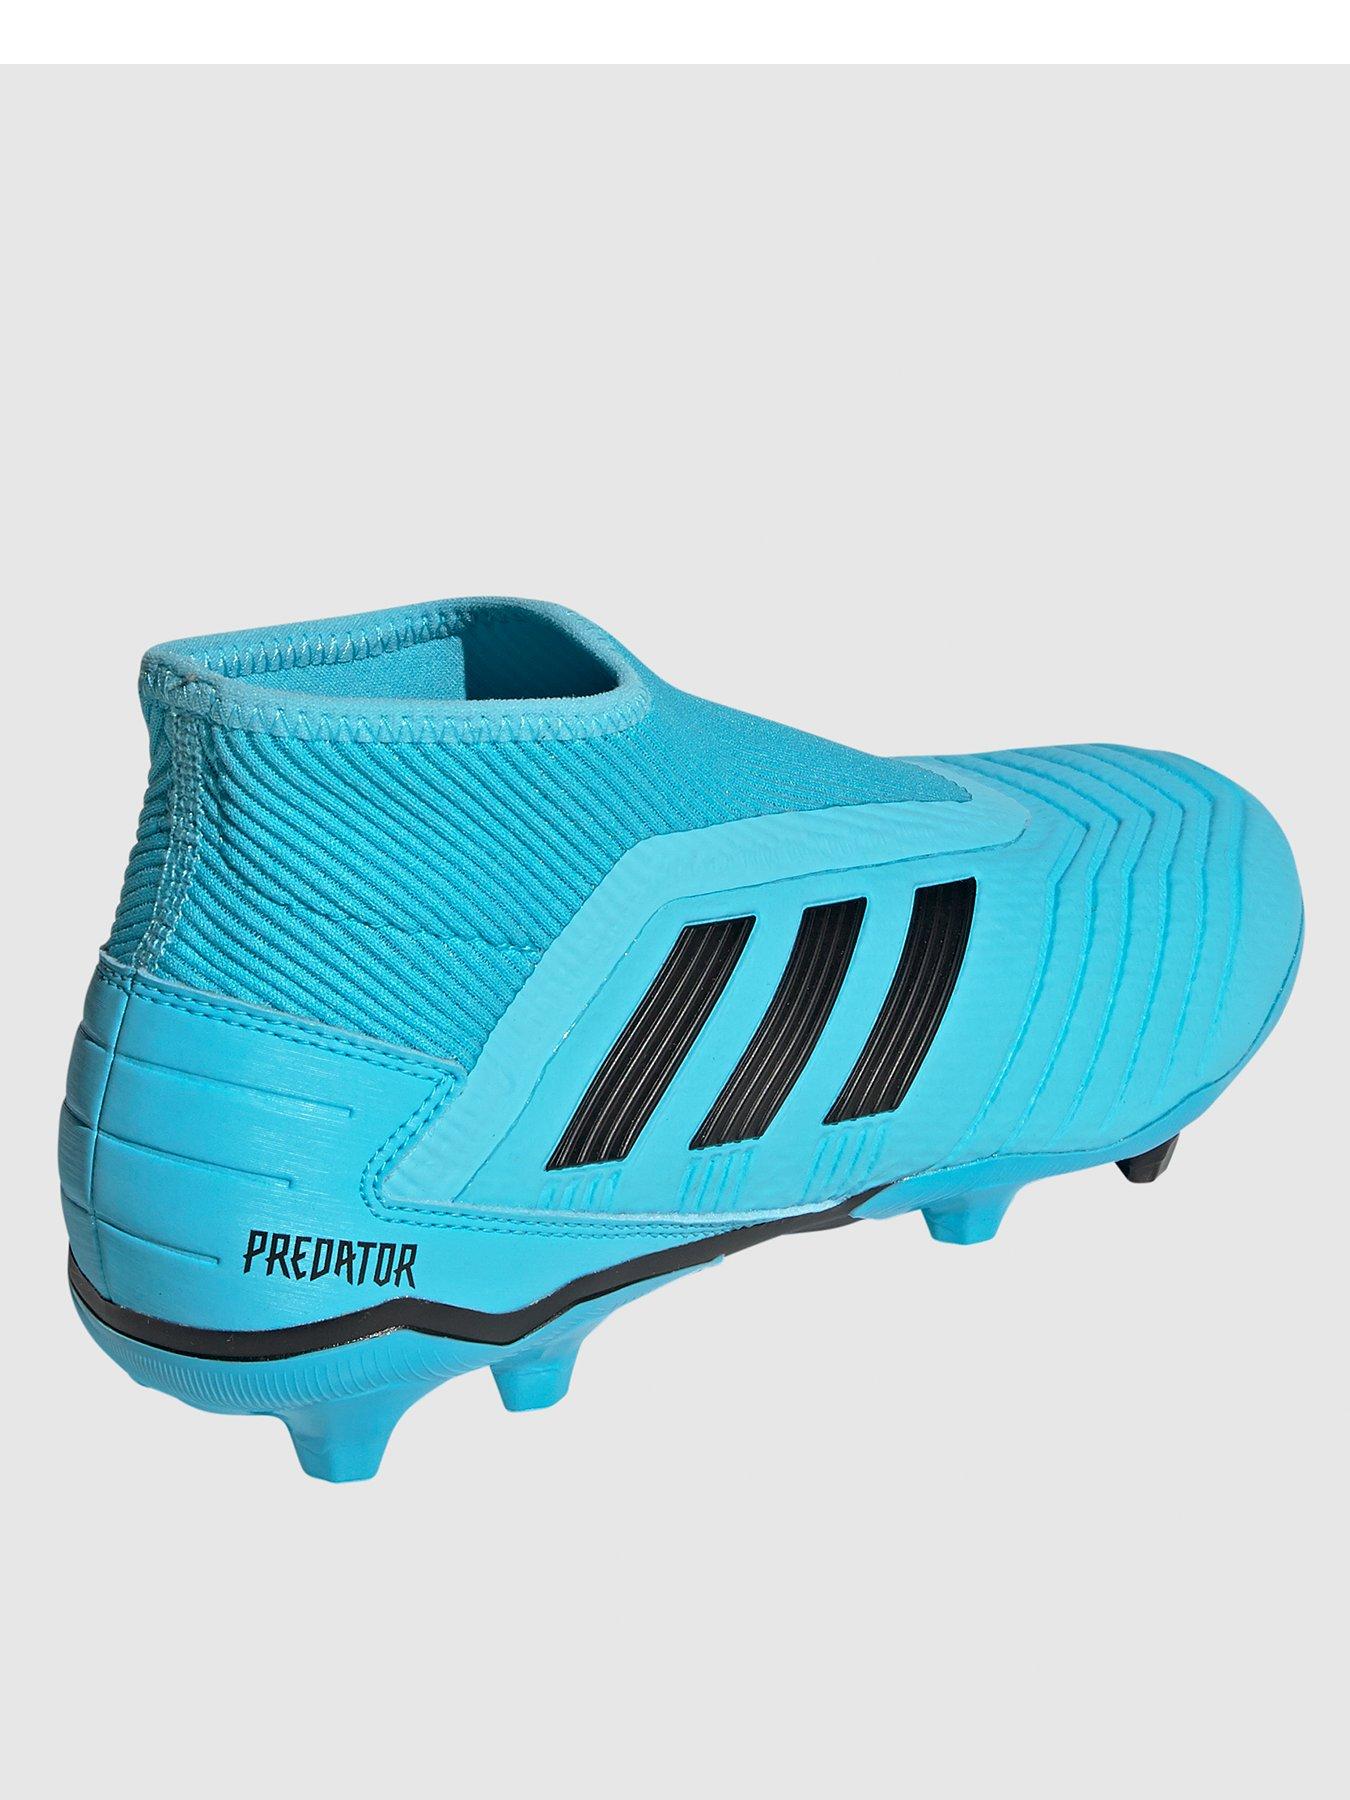 sports direct predator football boots